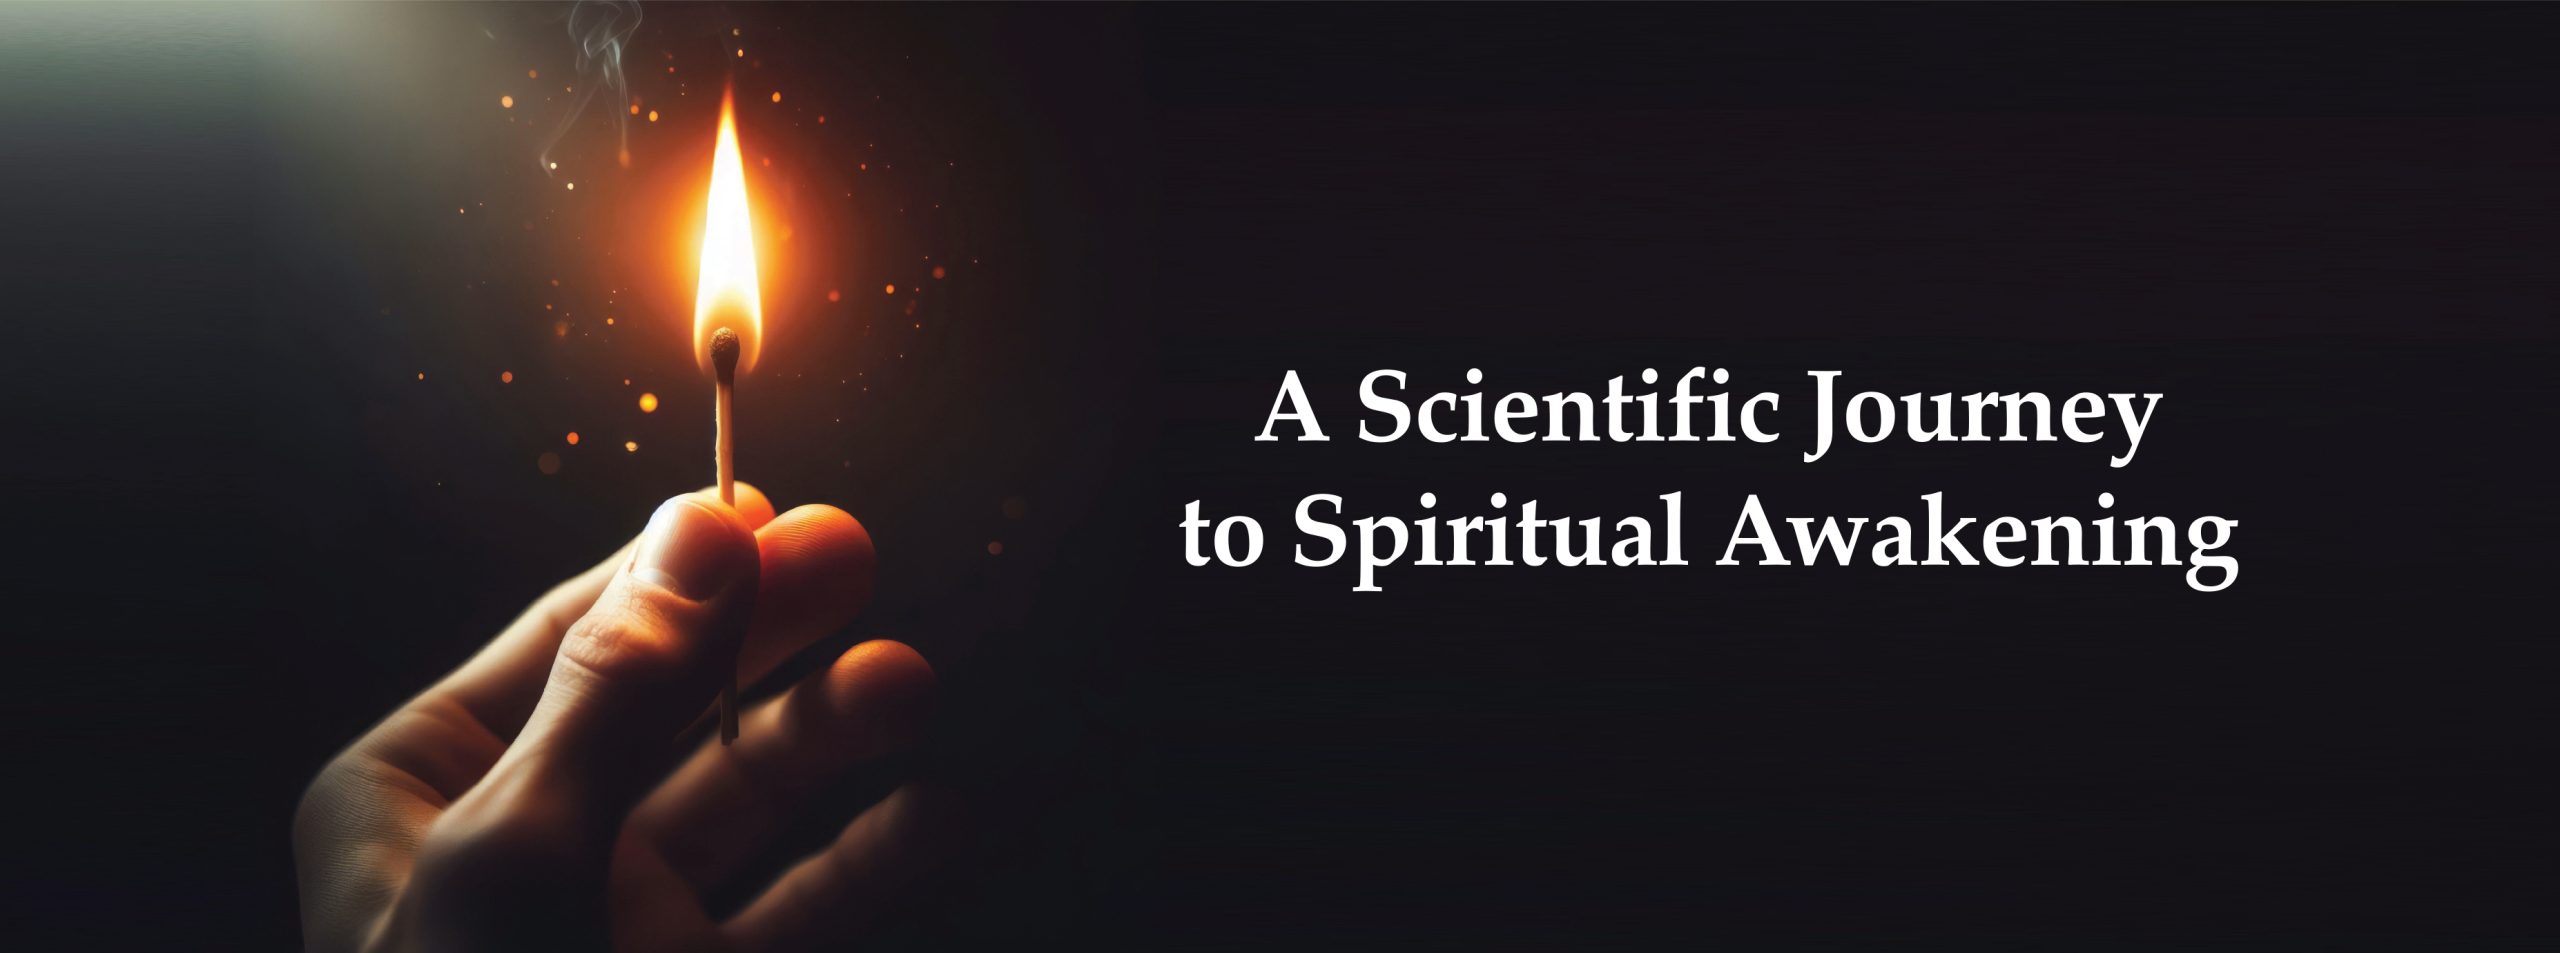 A Scientific Journey for Spiritual Awakening